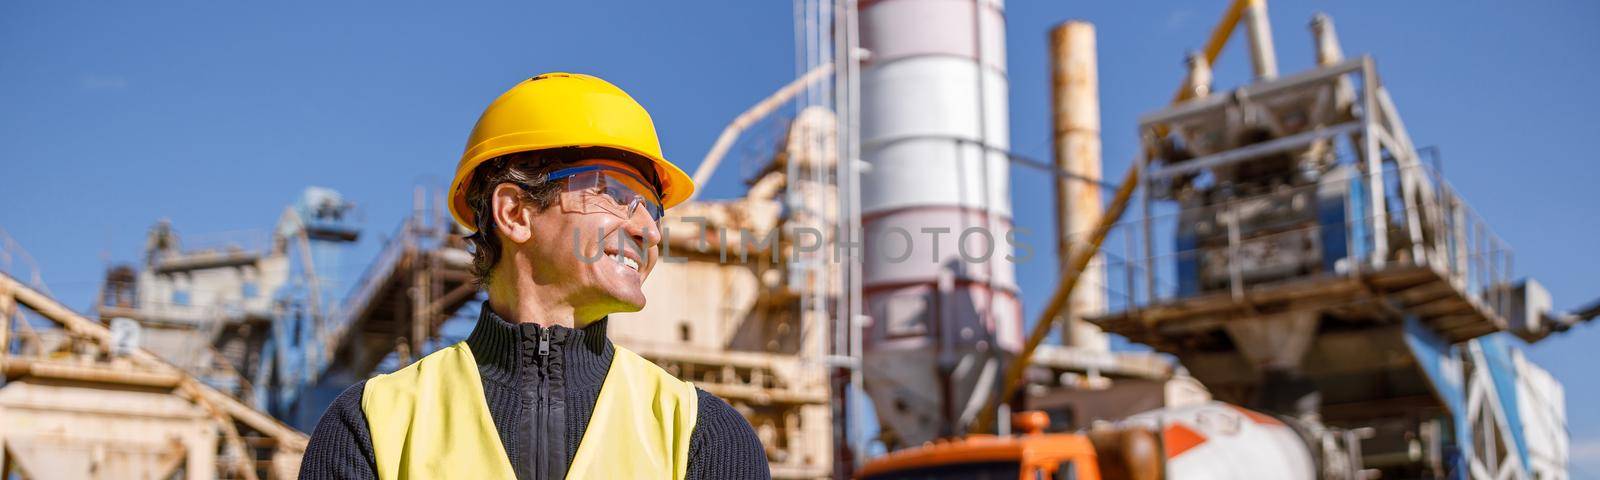 Cheerful male engineer standing outdoors at industrial site by Yaroslav_astakhov